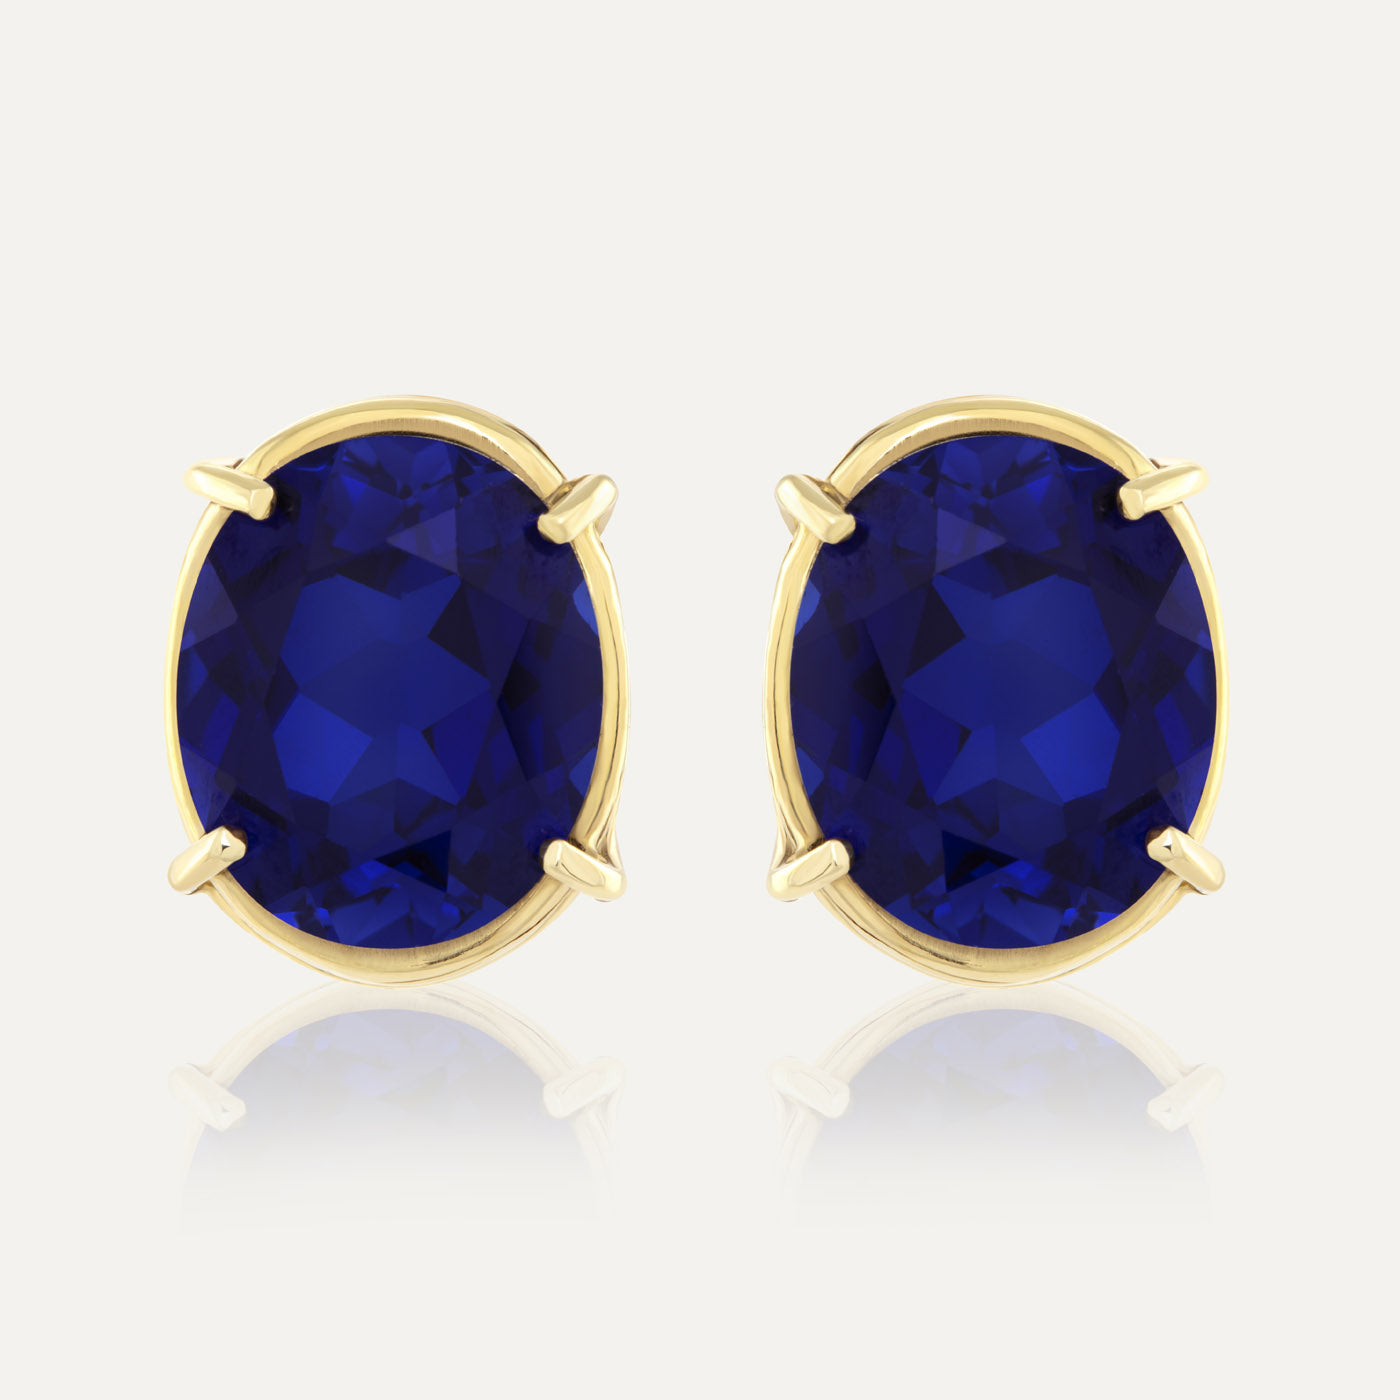 9ct Gold Oval Sapphire Gemstone Earrings